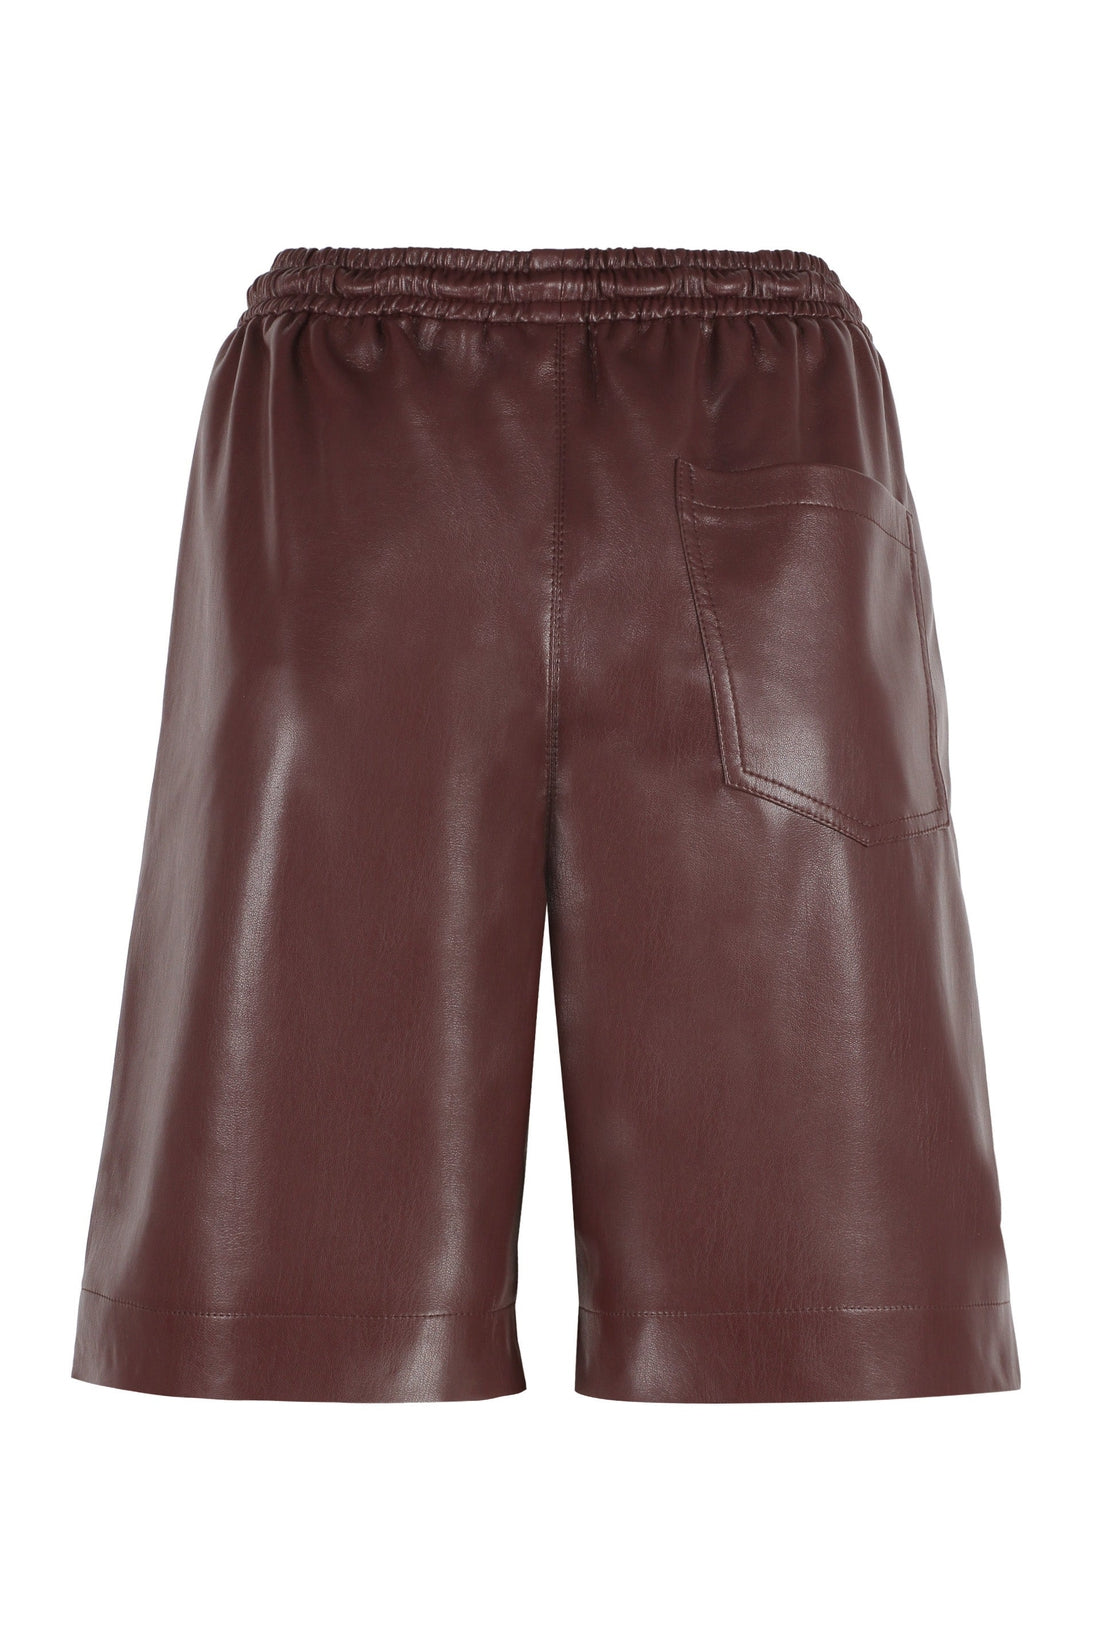 Nanushka-OUTLET-SALE-Munira faux leather shorts-ARCHIVIST